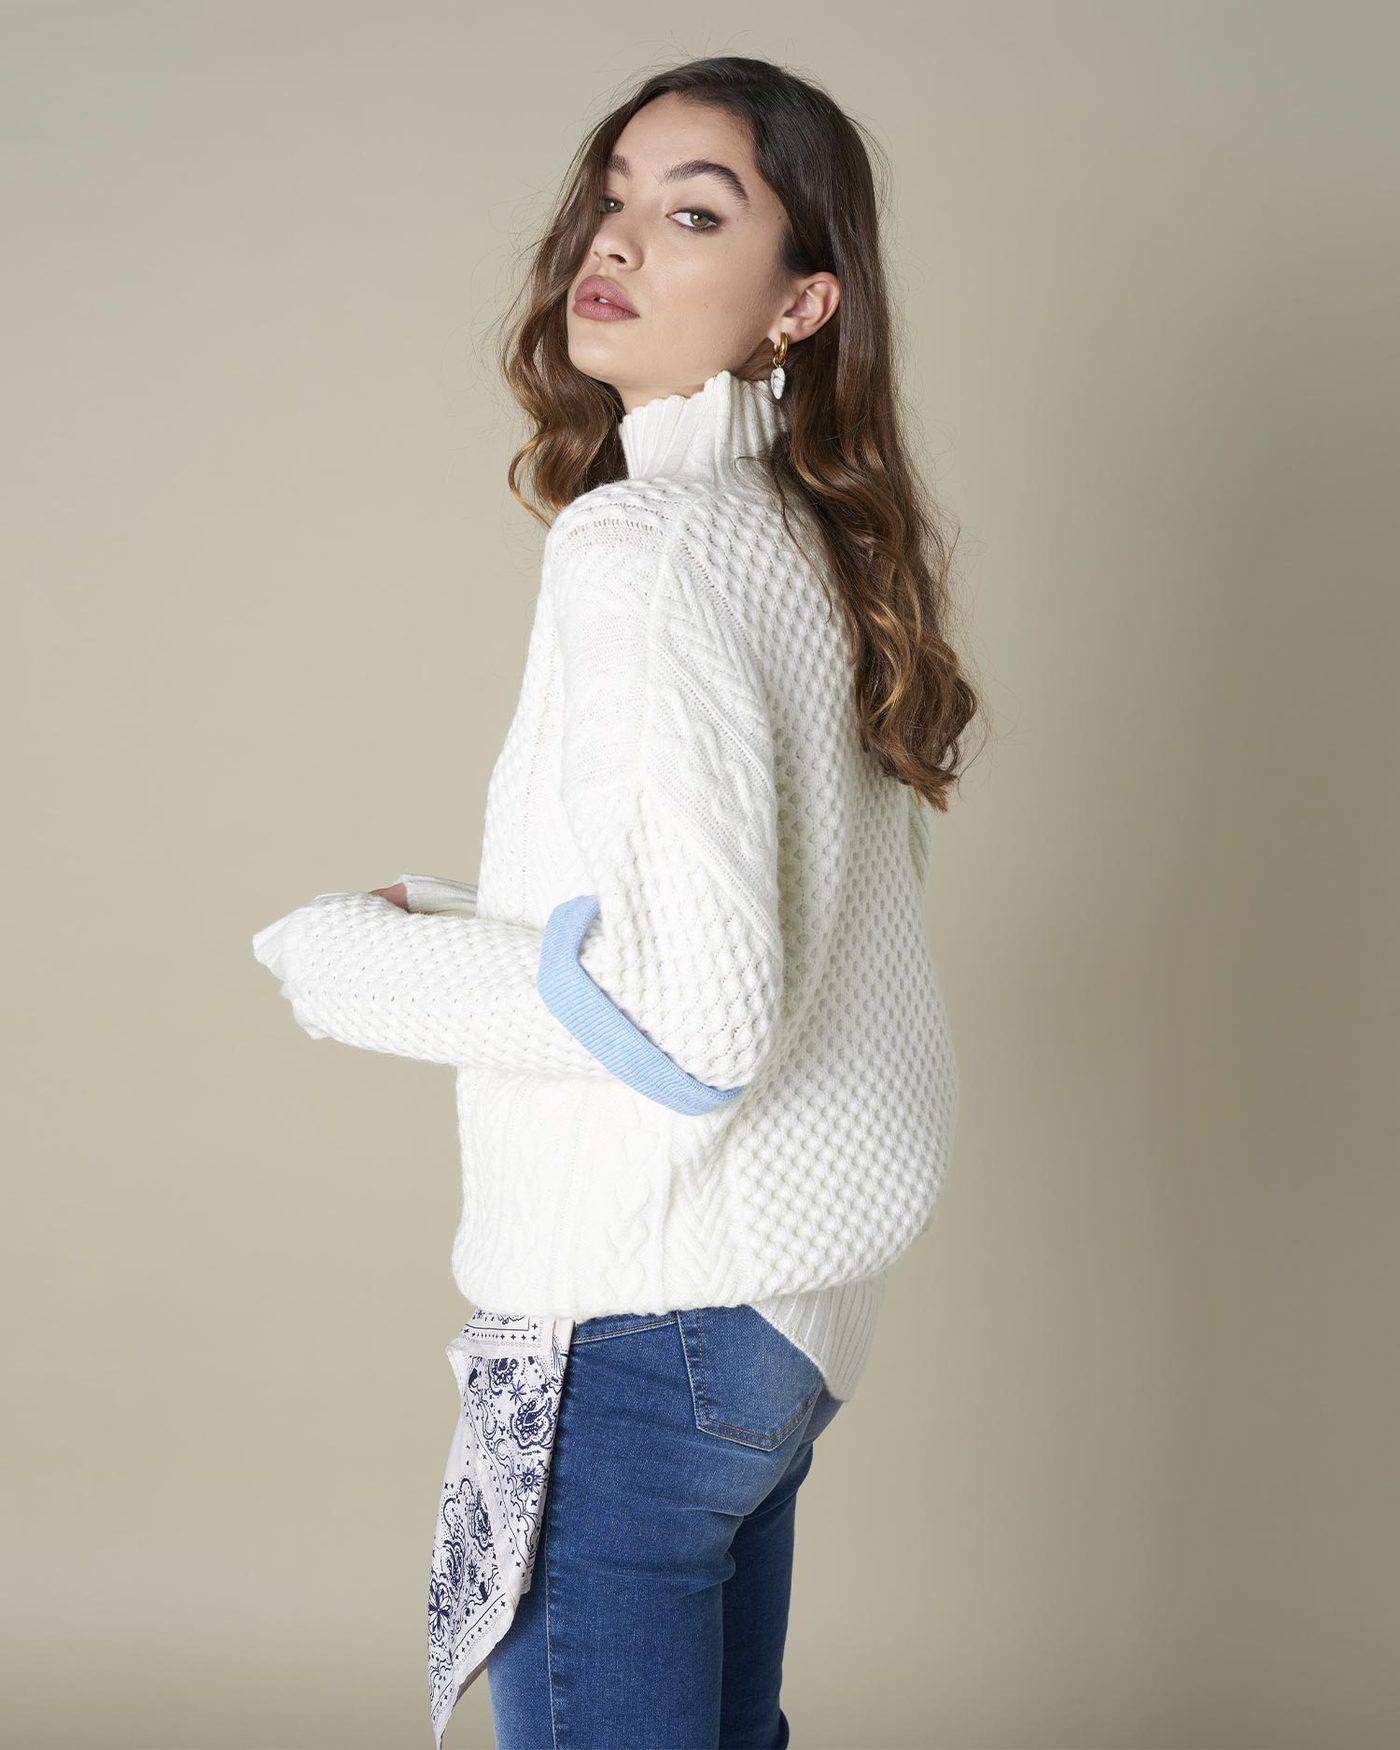 Vestido Silvian Heach blanco - Bayolo Concept Store